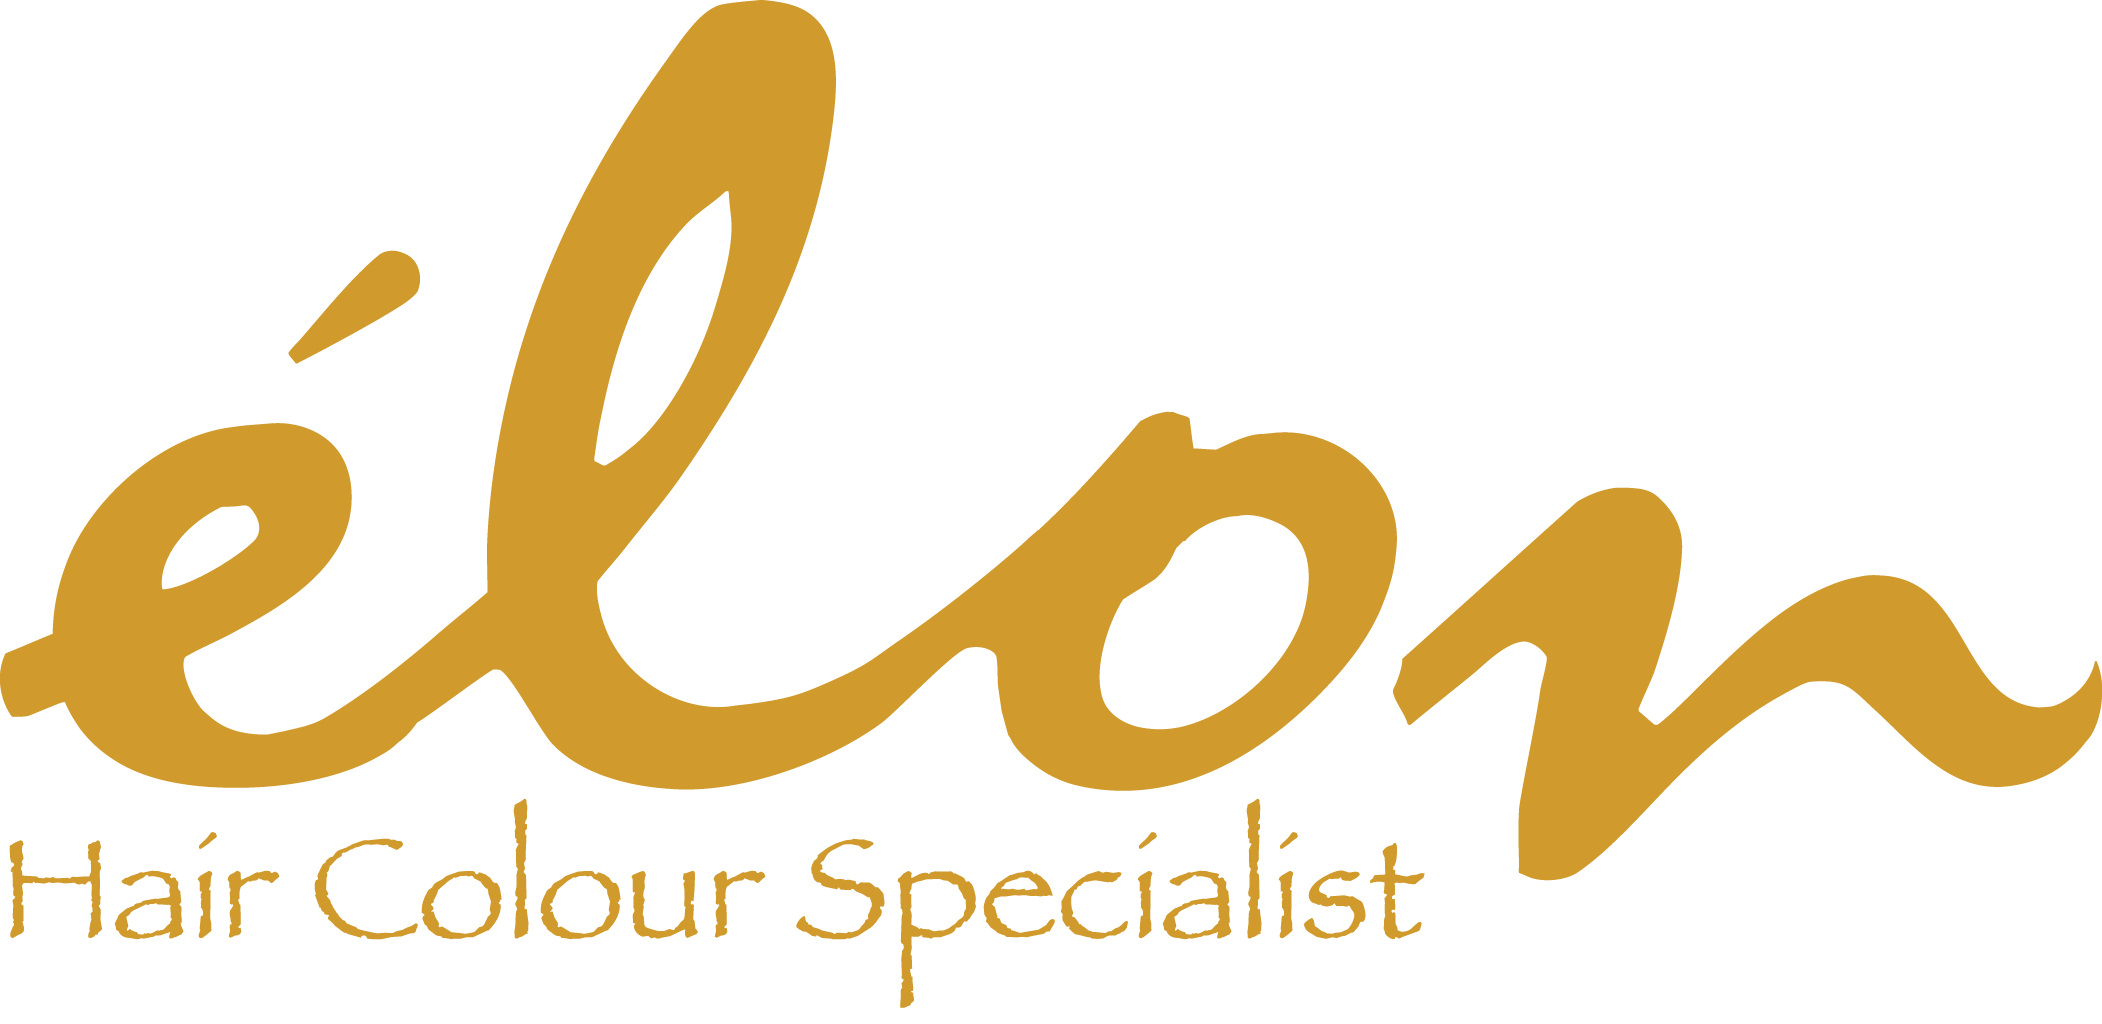 Shampoo clipart salon logo. About elon creating beautiful